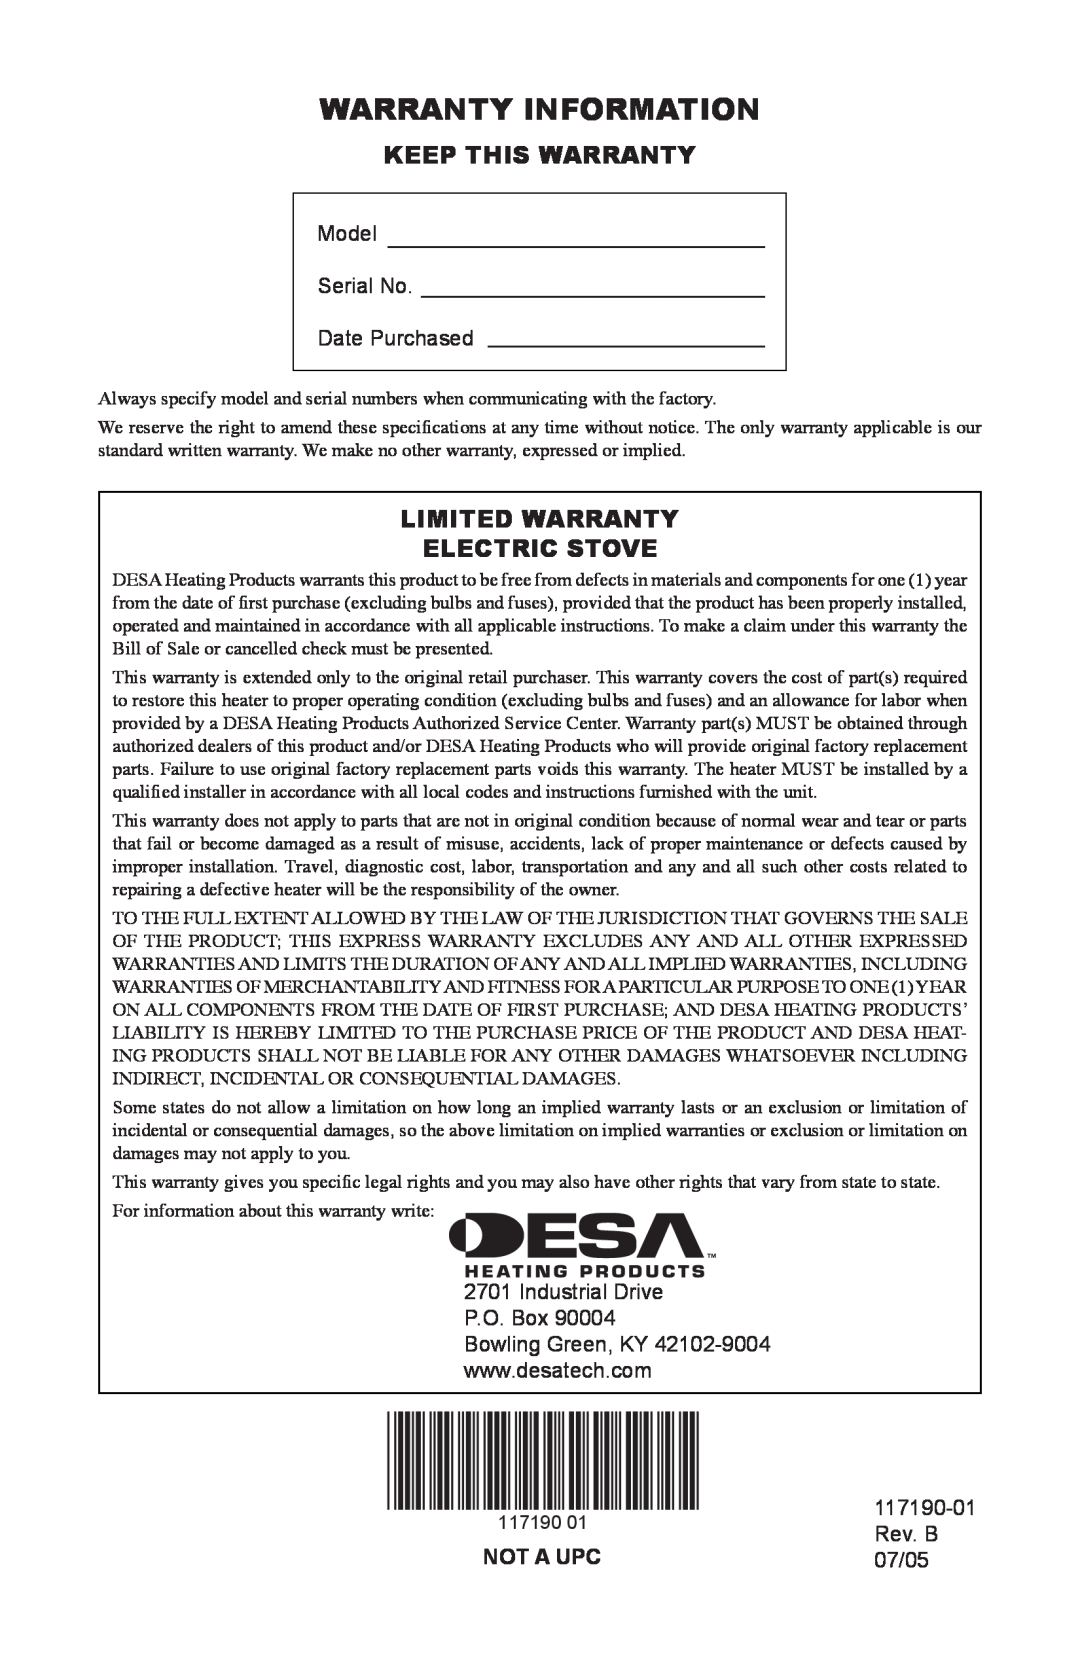 Desa VESBMR Warranty Information, Model Serial No Date Purchased, Industrial Drive P.O. Box, Rev. B, Not A Upc, 07/05 